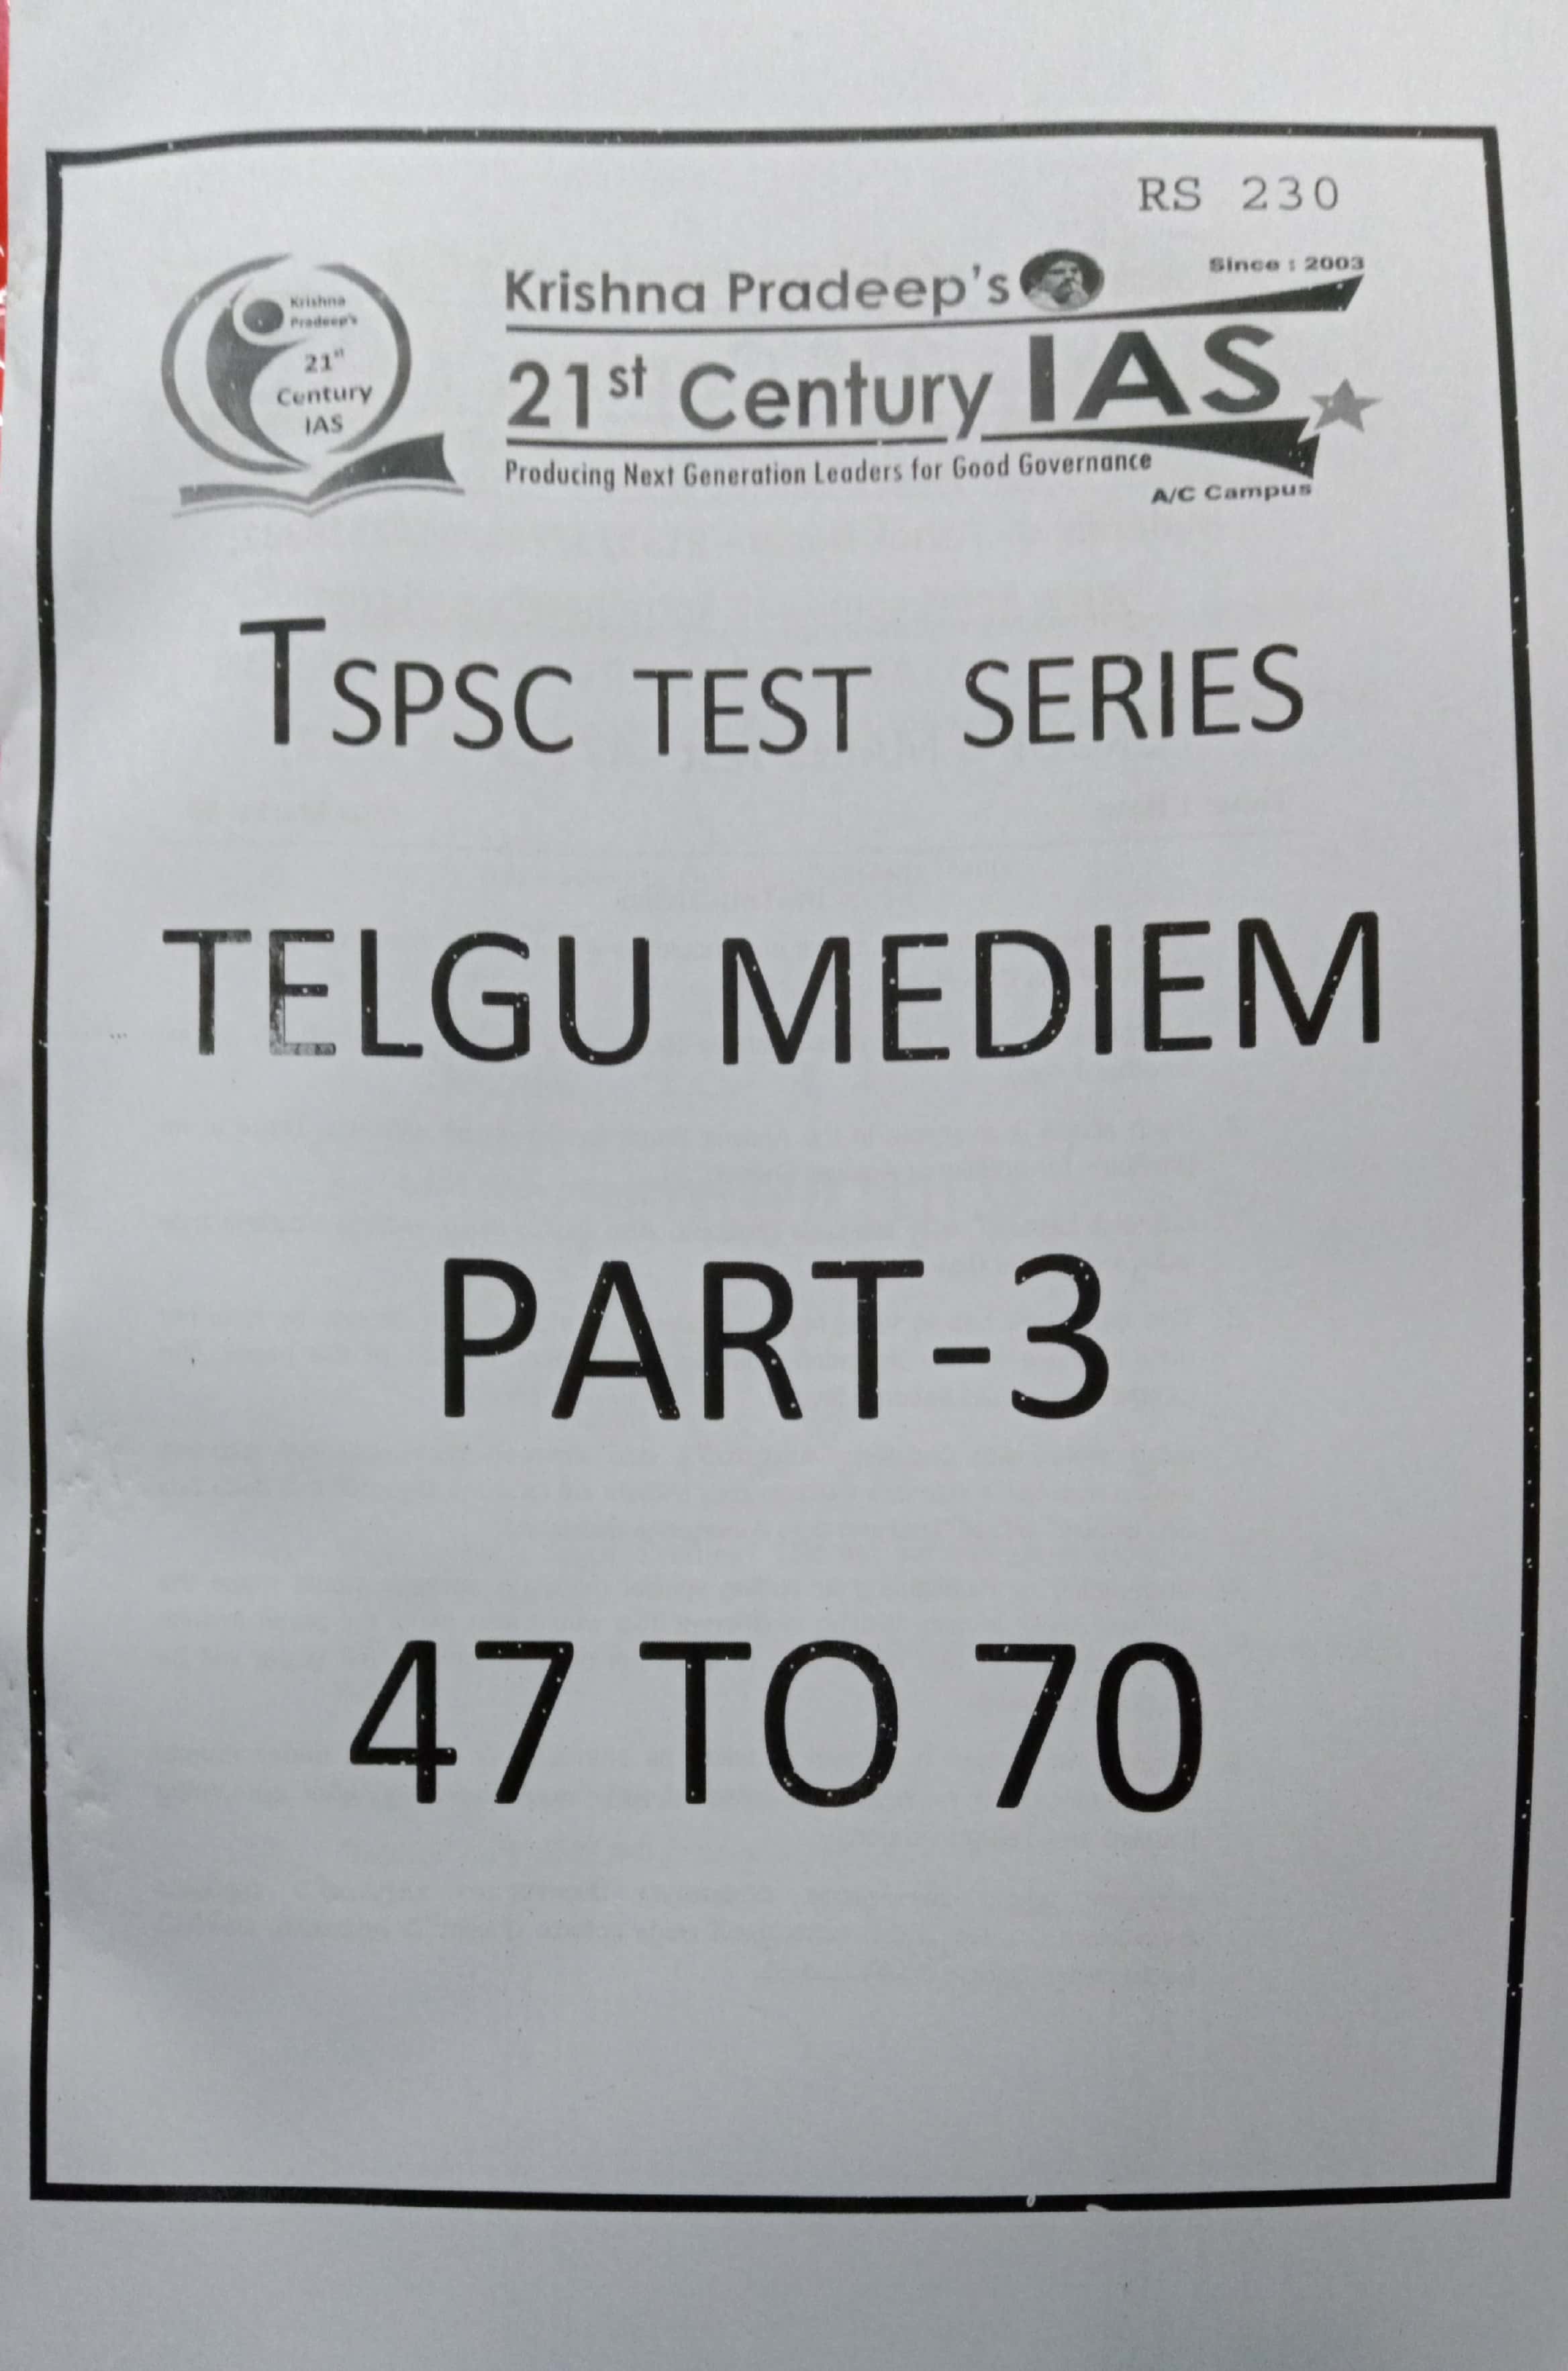 TSPSC GROUP 1 MAINS TEST SERIES TEST (47-70) PART-I [TELUGU MEDIUM] 21 CENTURY XEROX PRINTED MATERIAL